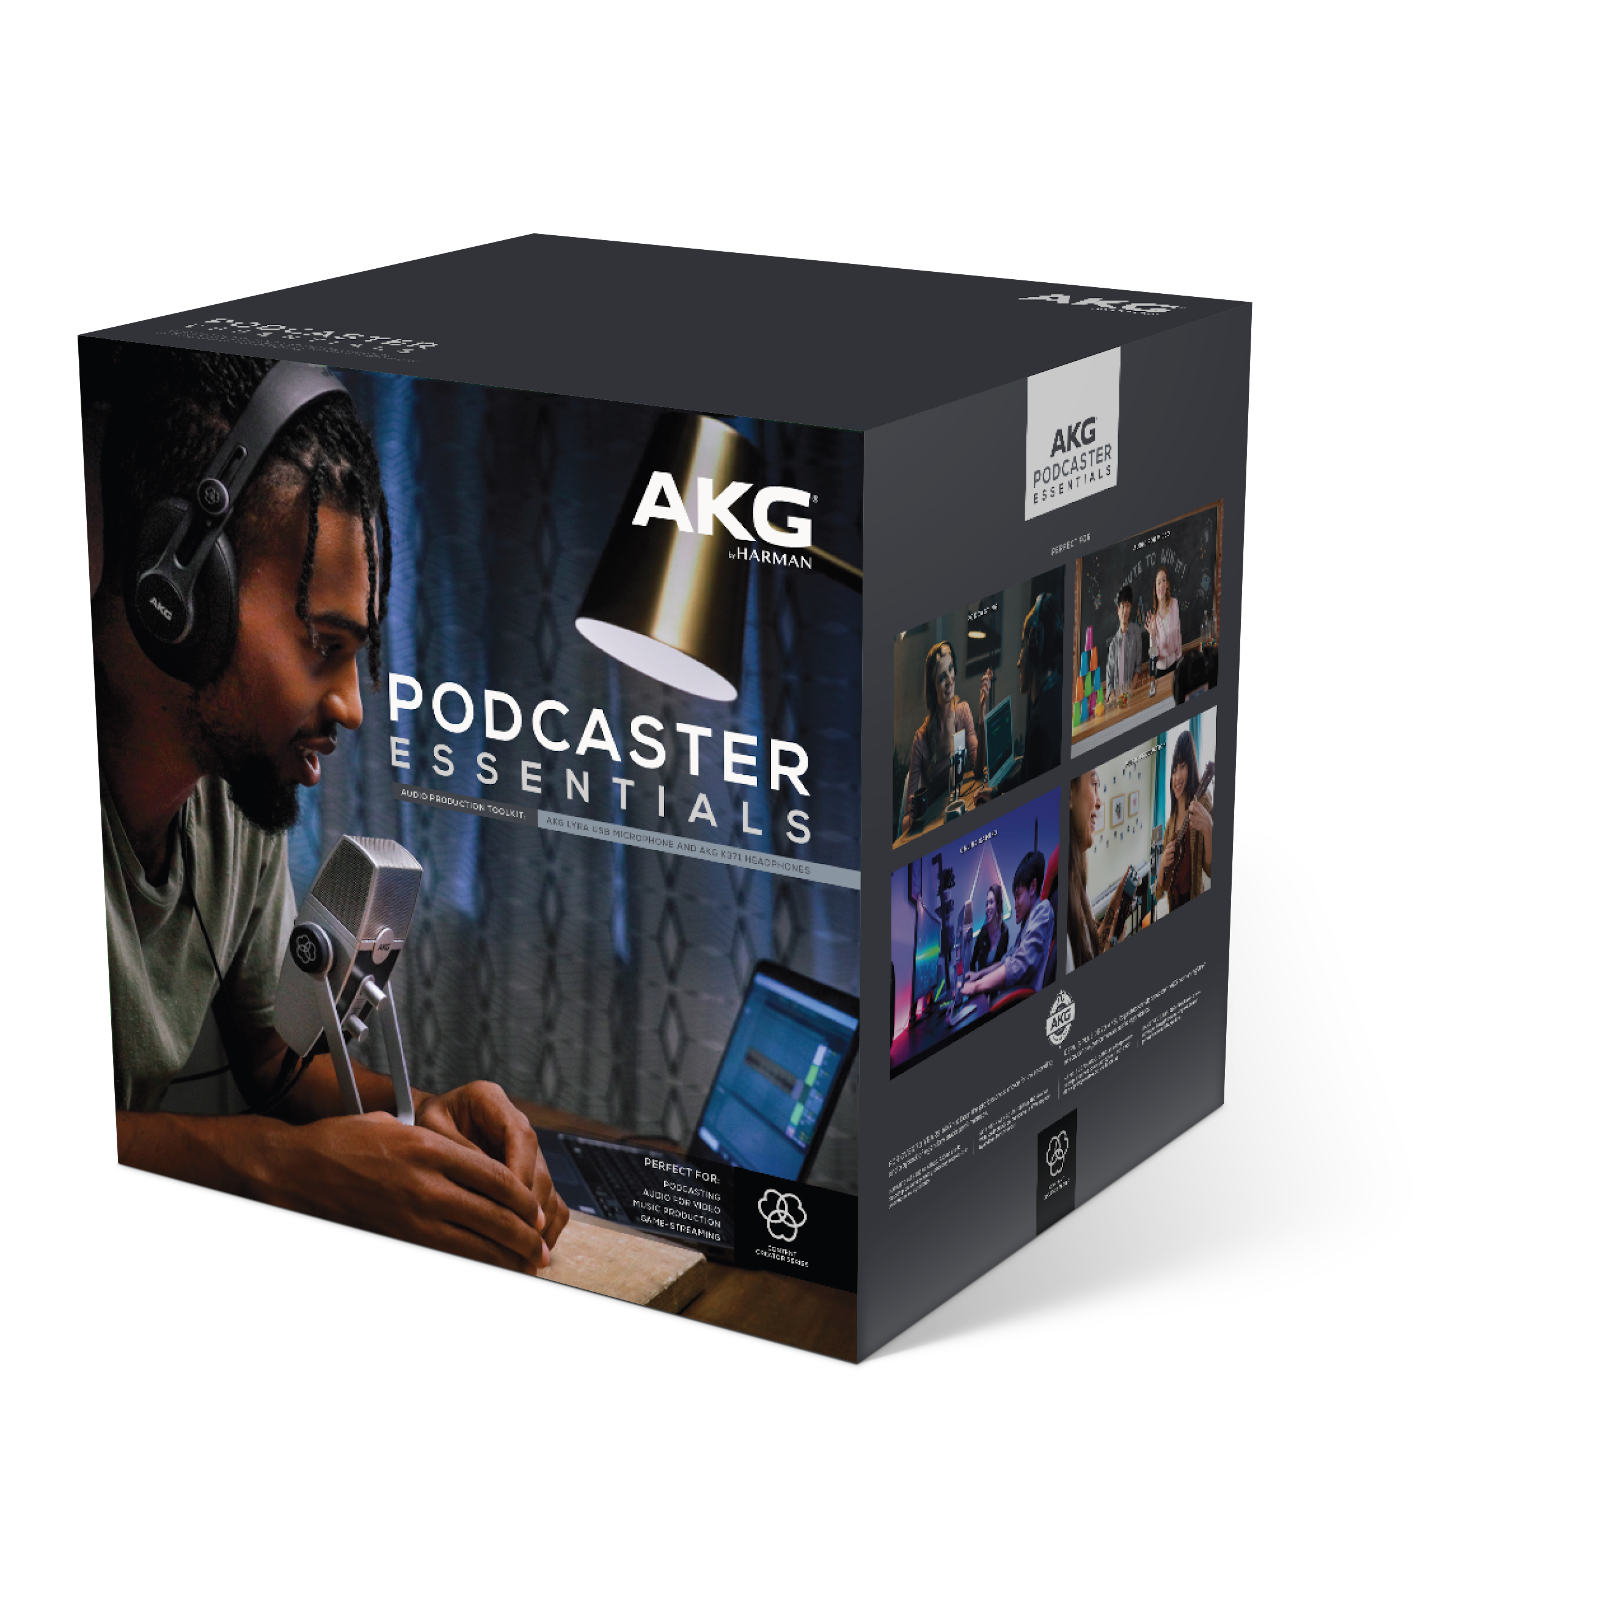 AKG Podcaster Essentials (B-Stock) - Black / Gray - Audio Production Toolkit: AKG Lyra USB Microphone and AKG K371 Headphones - Detailshot 1